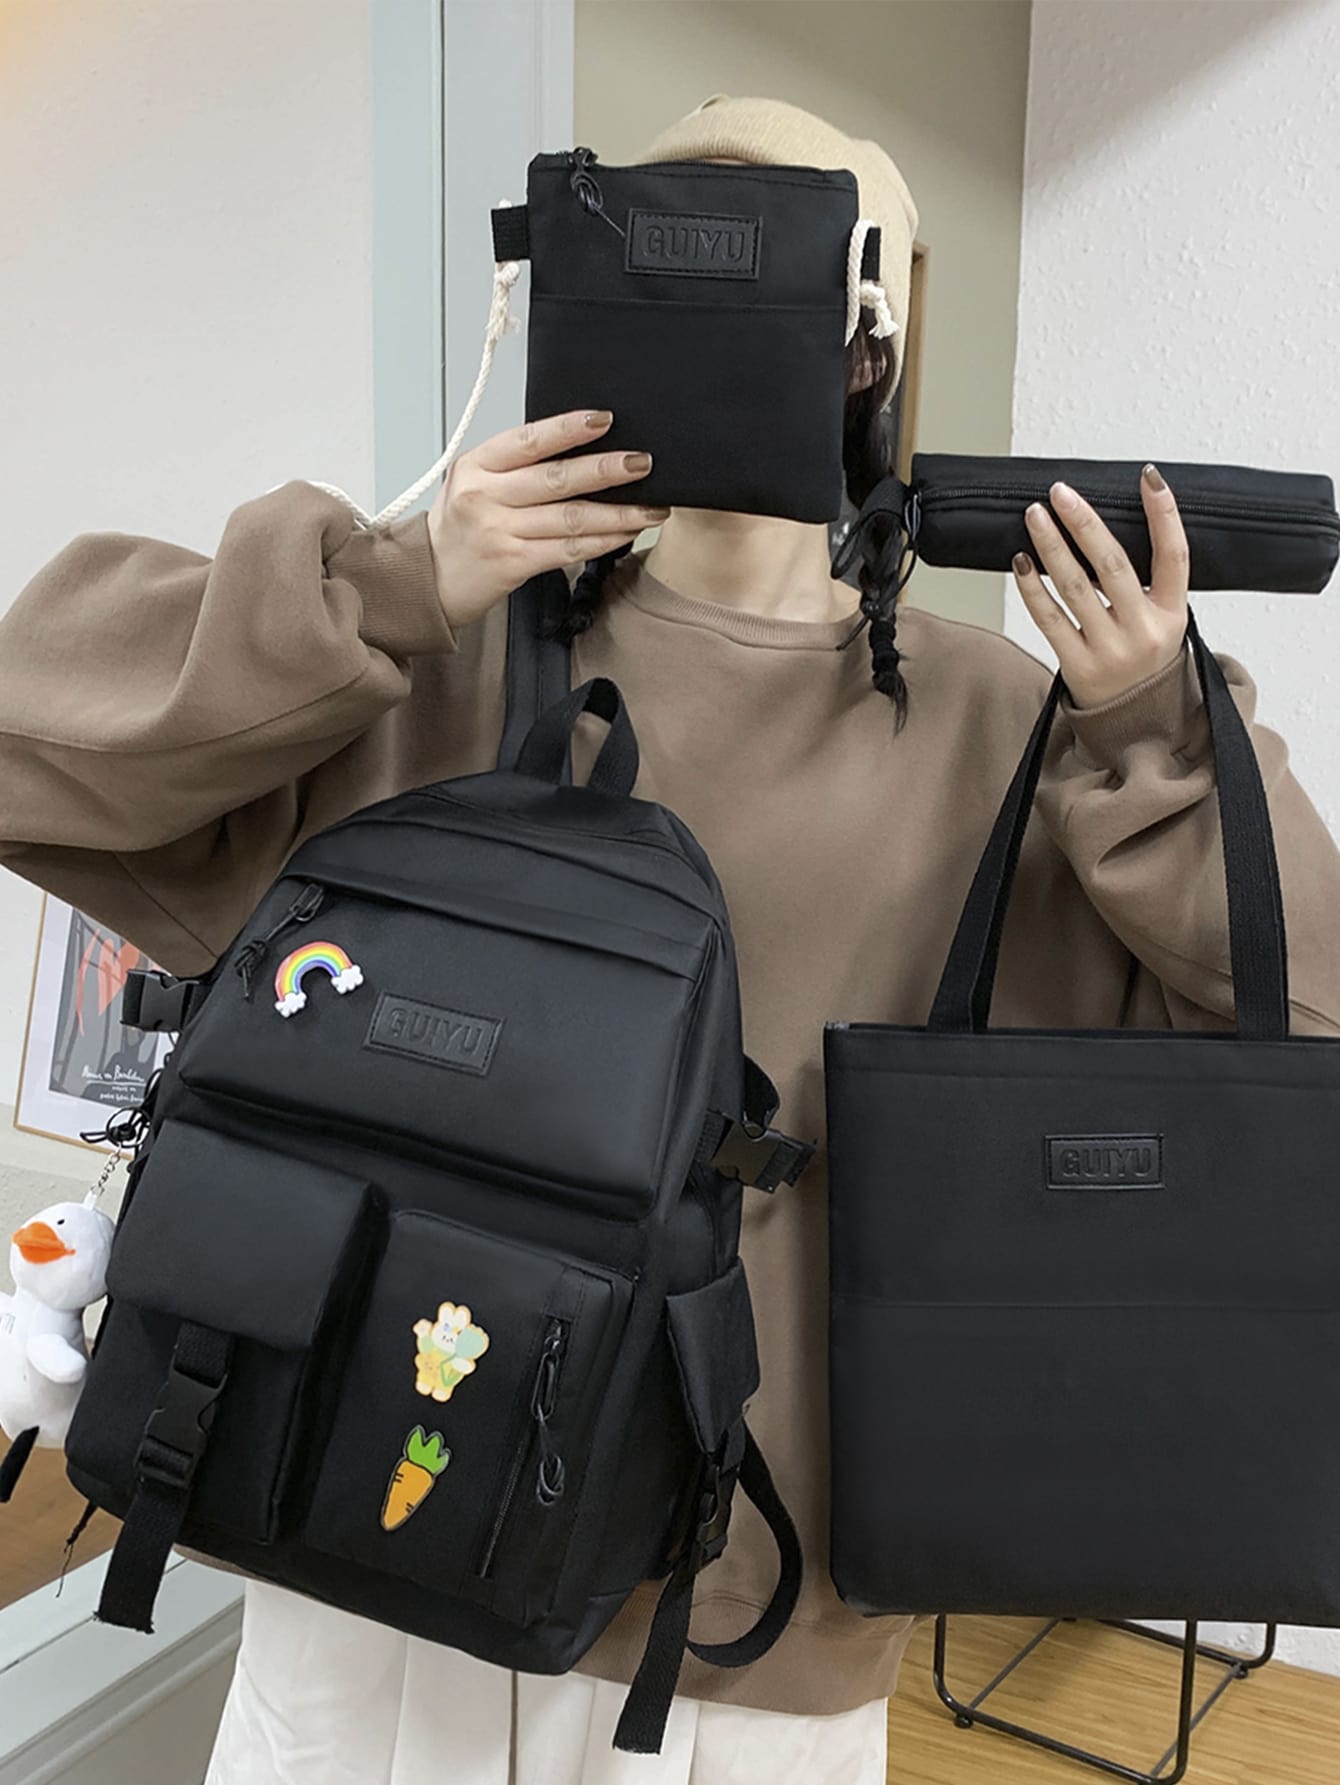 4pcs Cartoon Charm Backpack Set